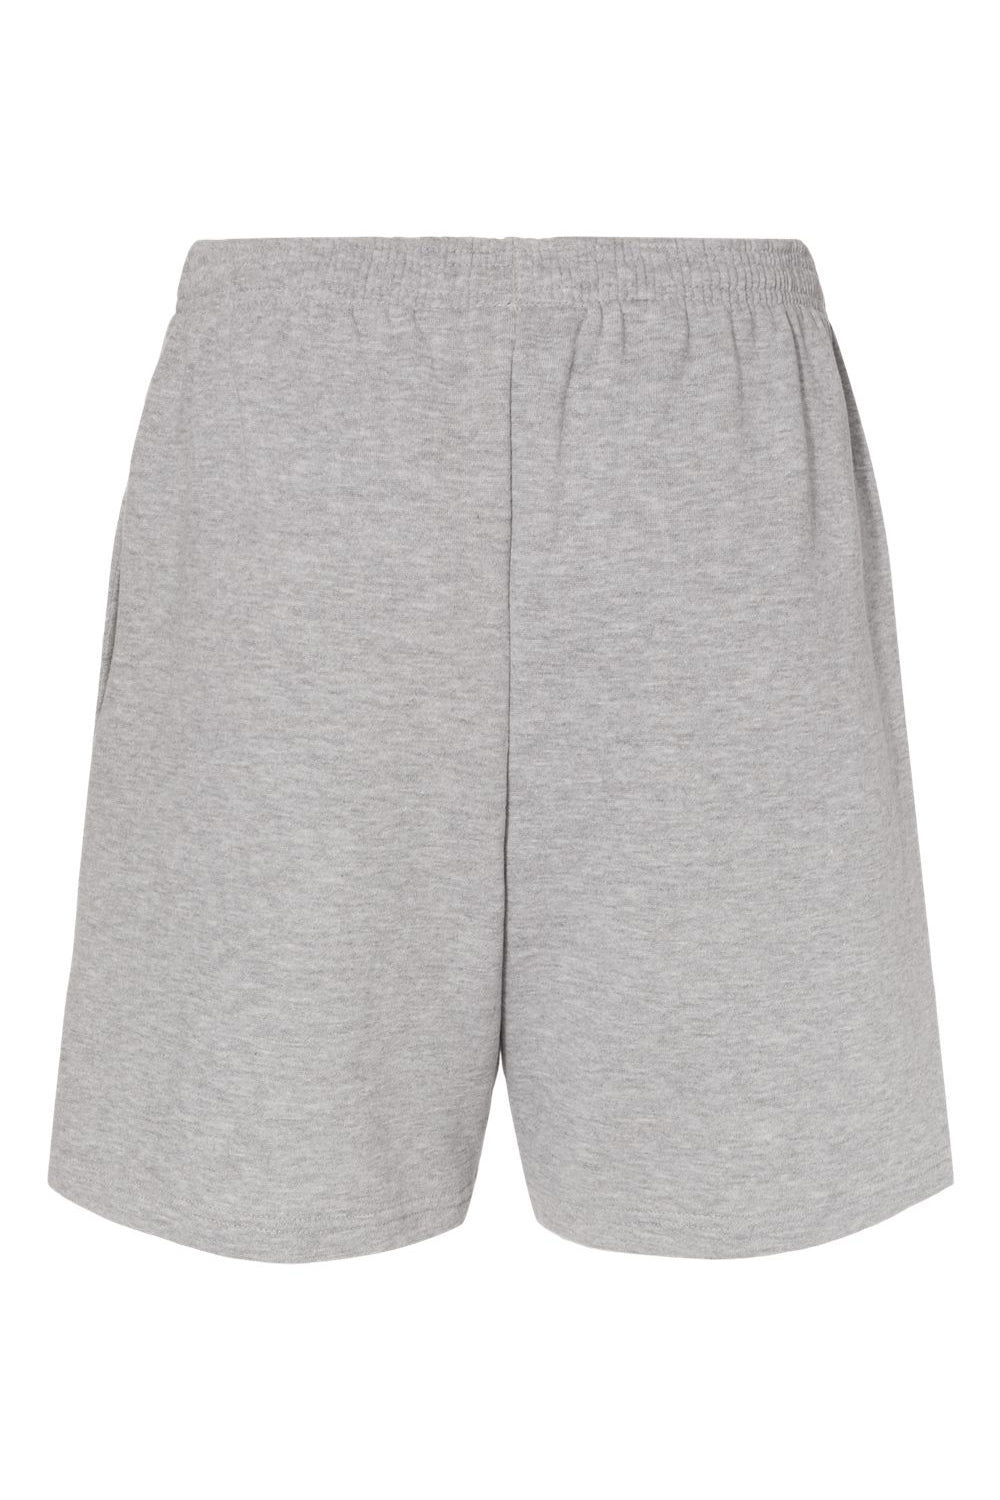 Badger 1207 Mens Athletic Fleece Shorts w/ Pockets Oxford Grey Flat Back